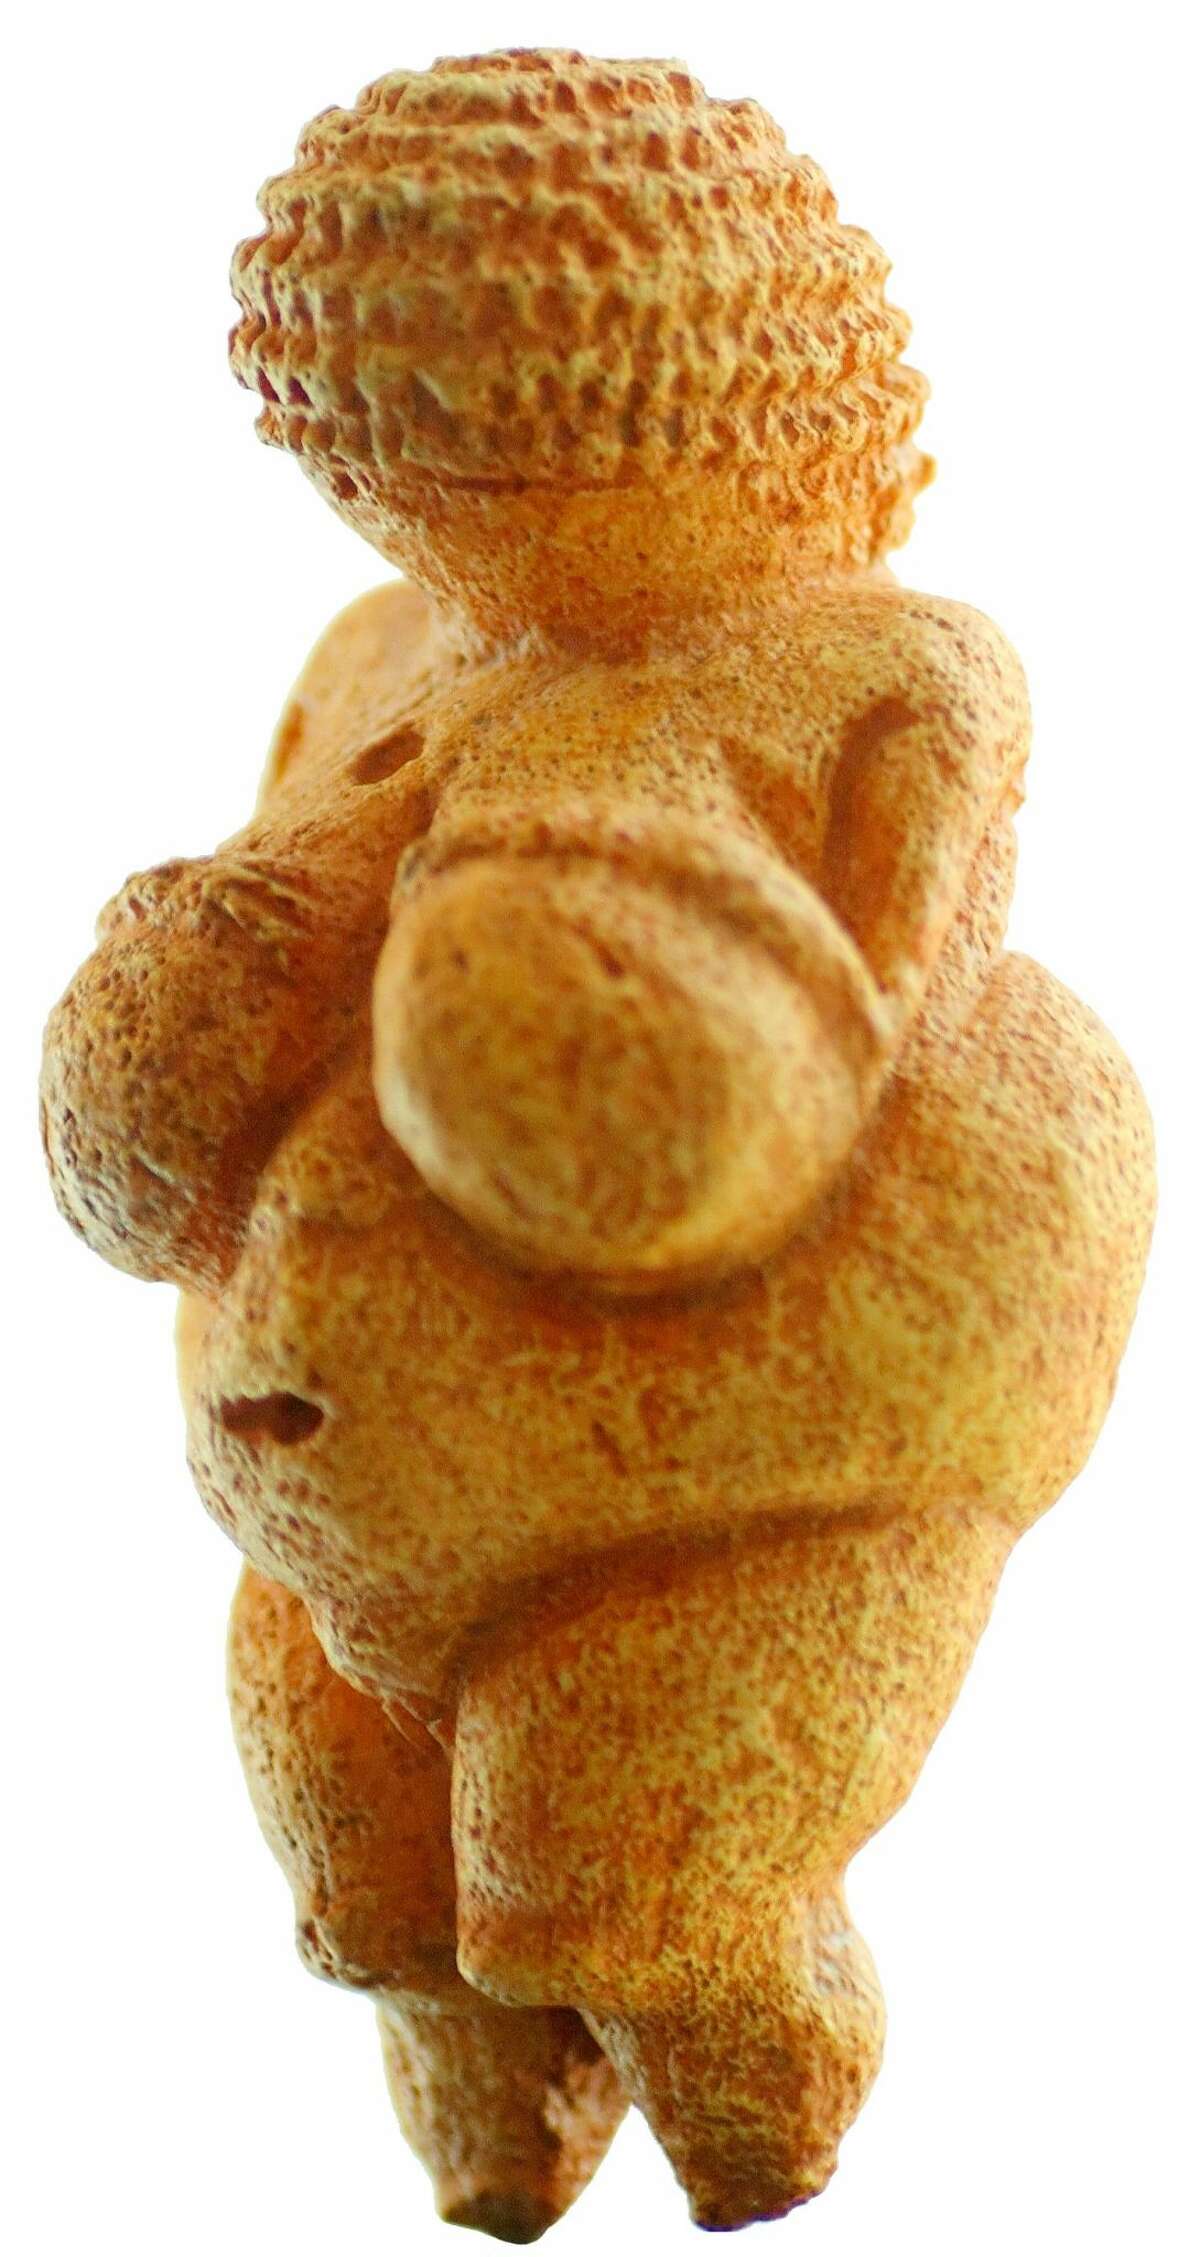 Is Facebook nude-shaming the Venus of Willendorf?